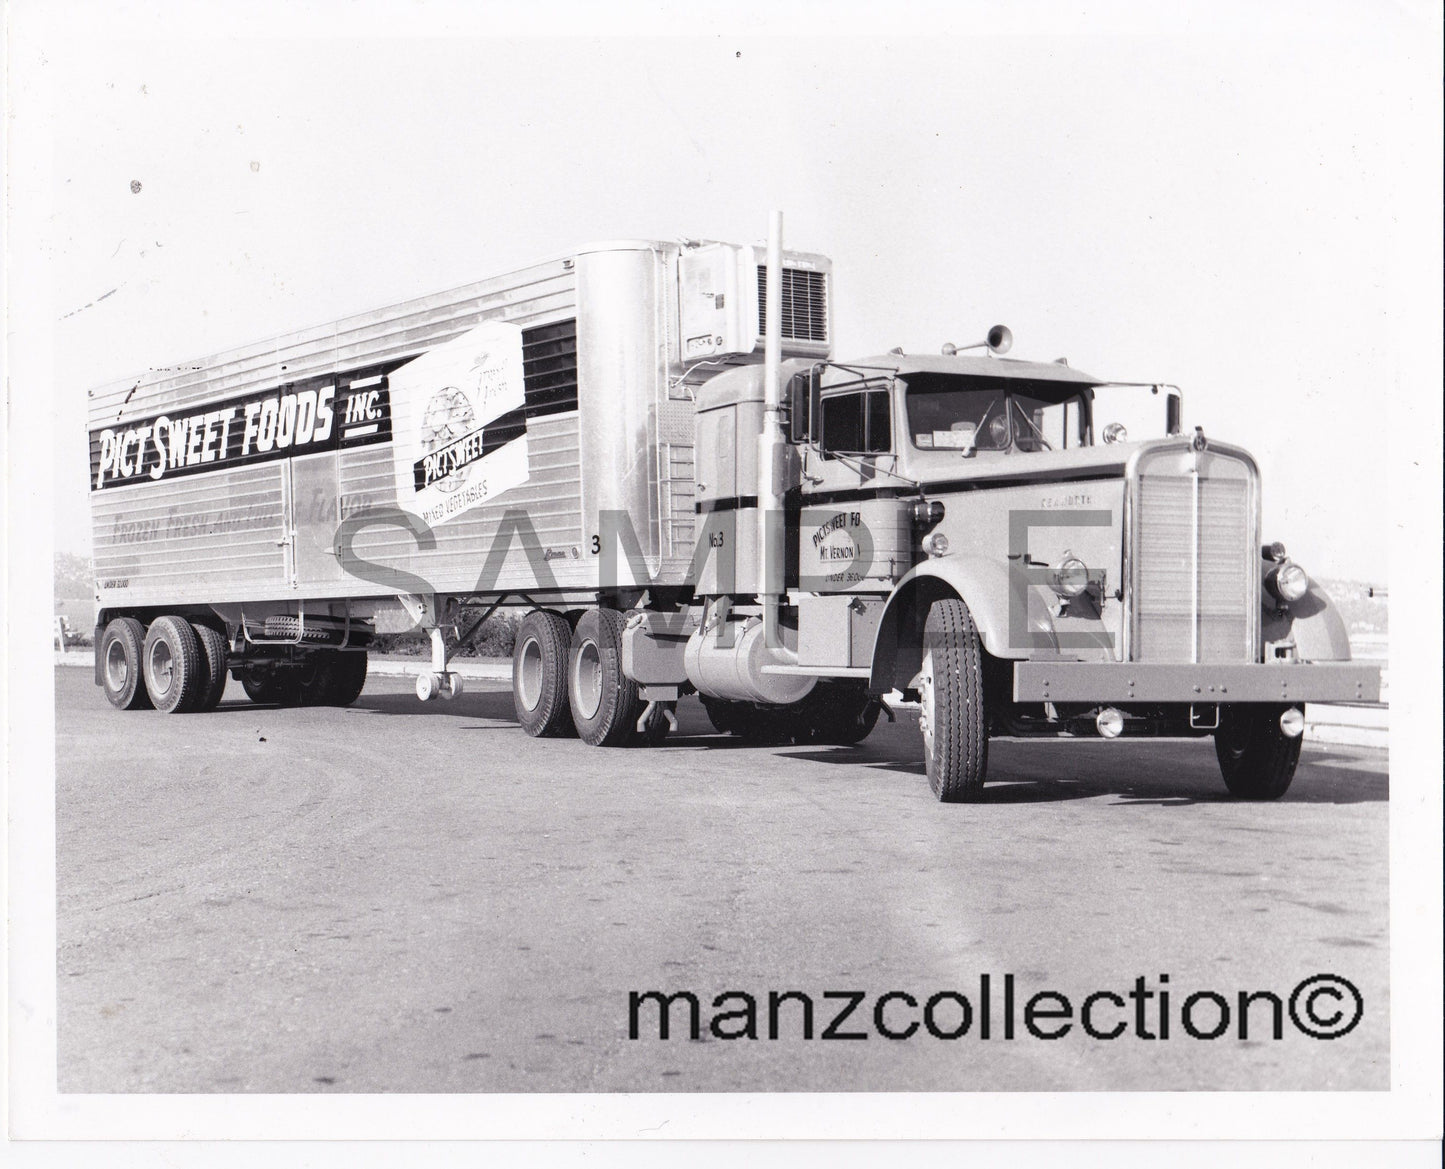 8X10 b & w semi-truck photo '50's Kenworth PICTSWEET FOODS - Transportation Treasure